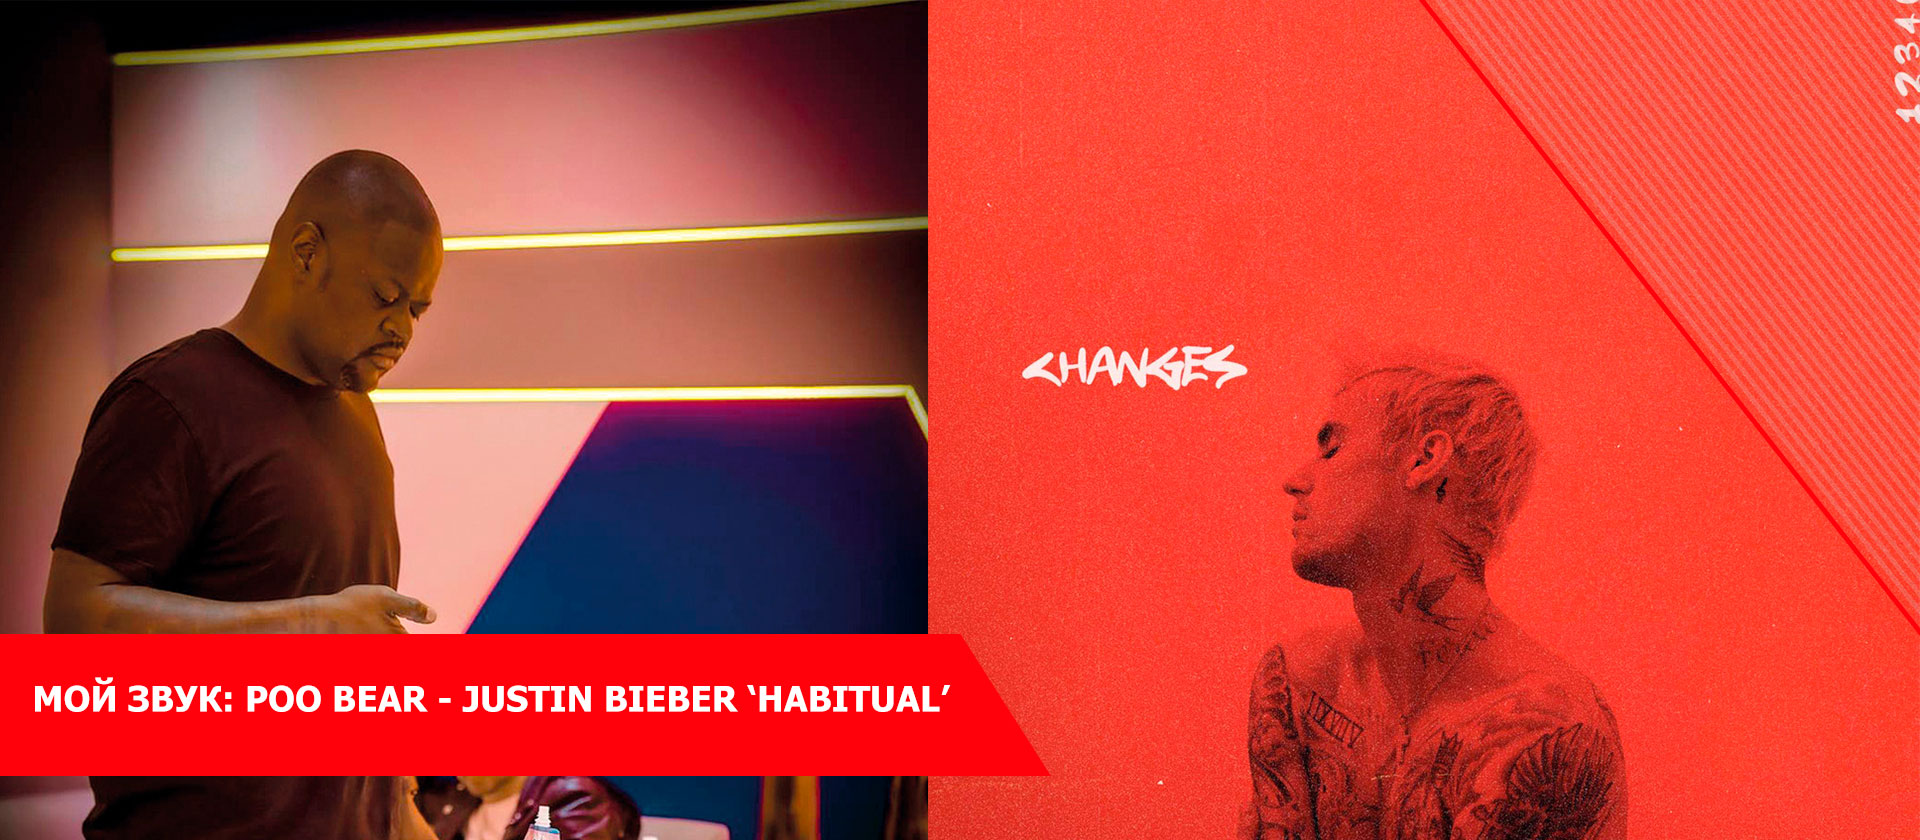 Мой звук: Poo Bear - Justin Bieber ‘Habitual’